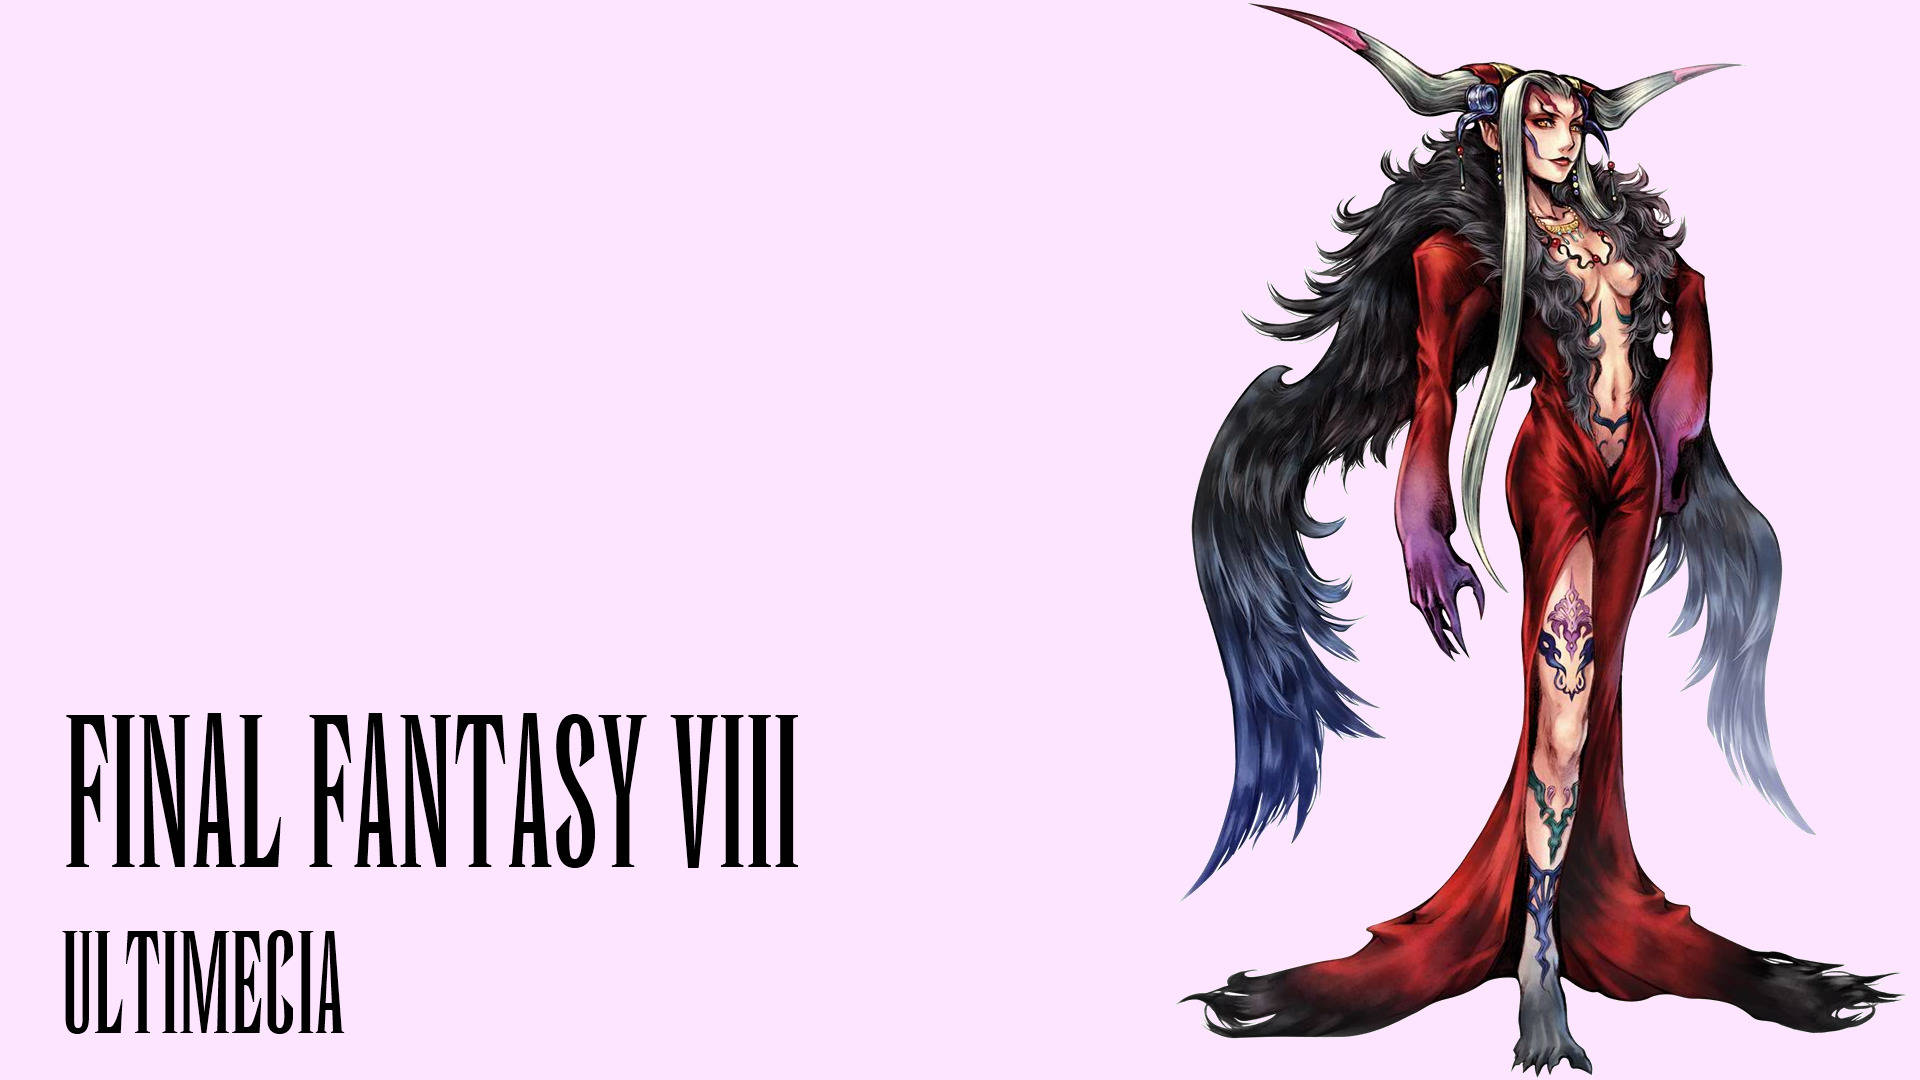 Final Fantasy 8 Poster Ultimecia